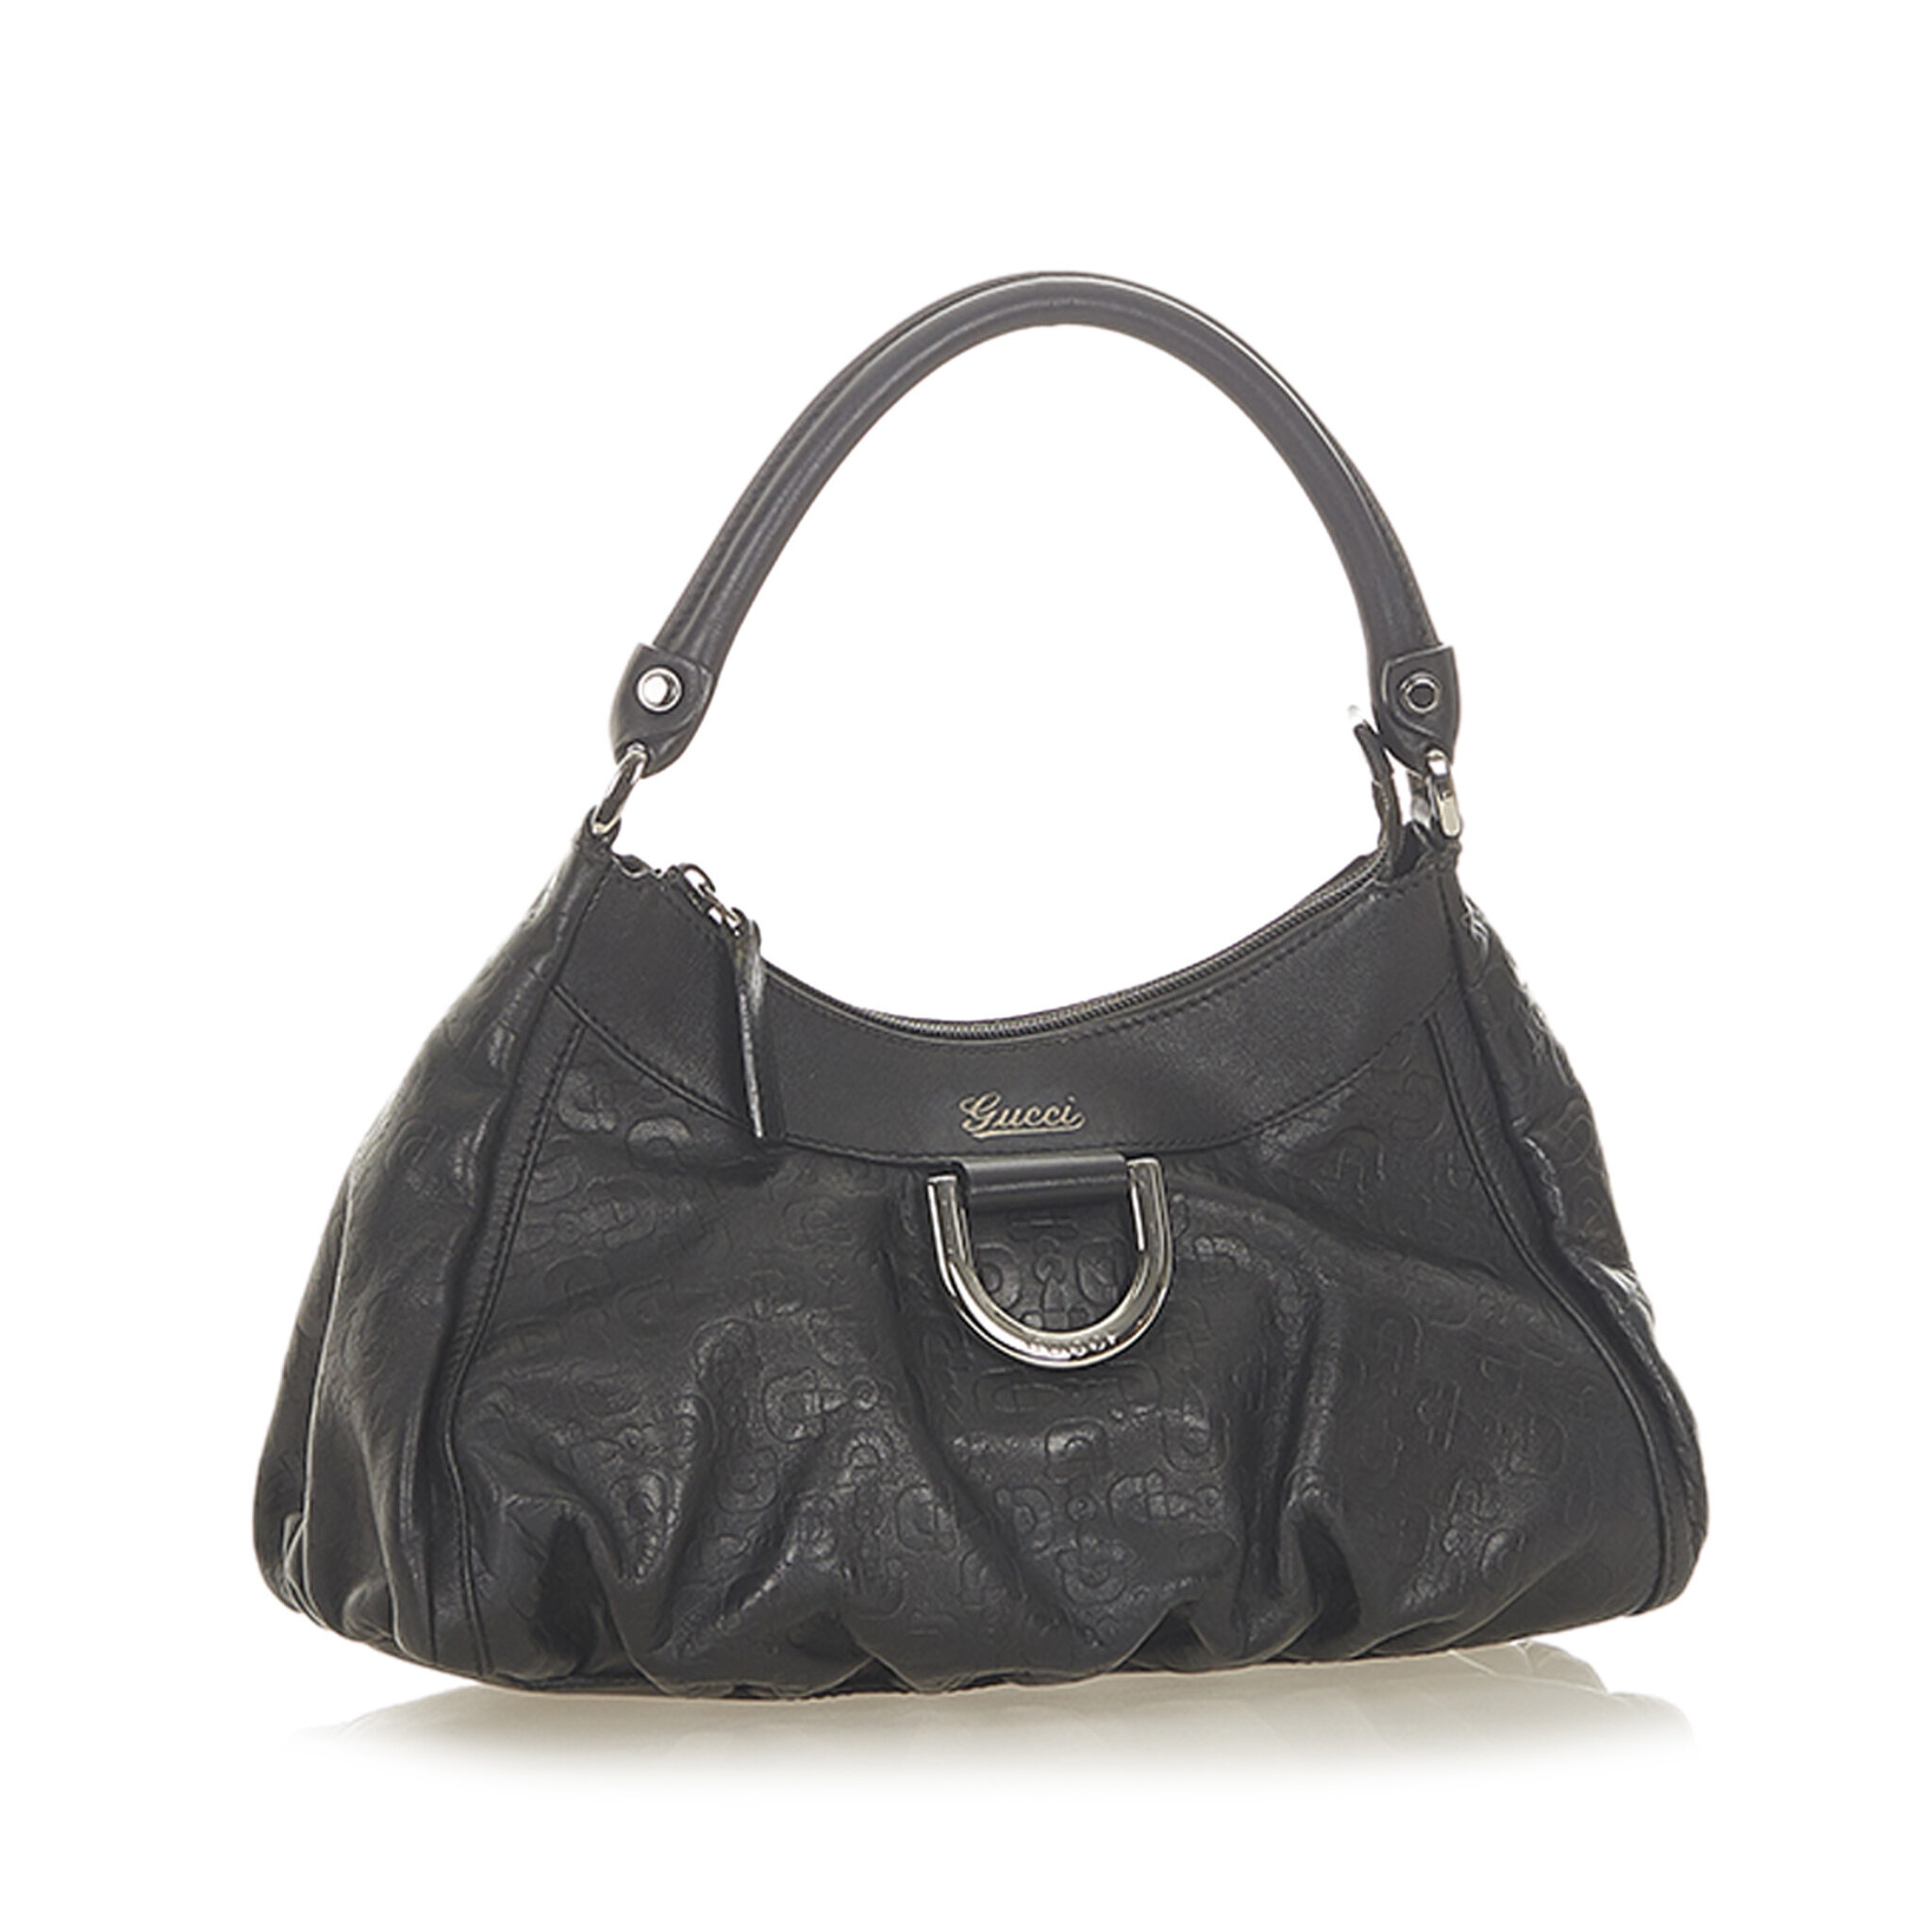 Gucci Horsebit Abbey D-ring Leather Shoulder Bag, black